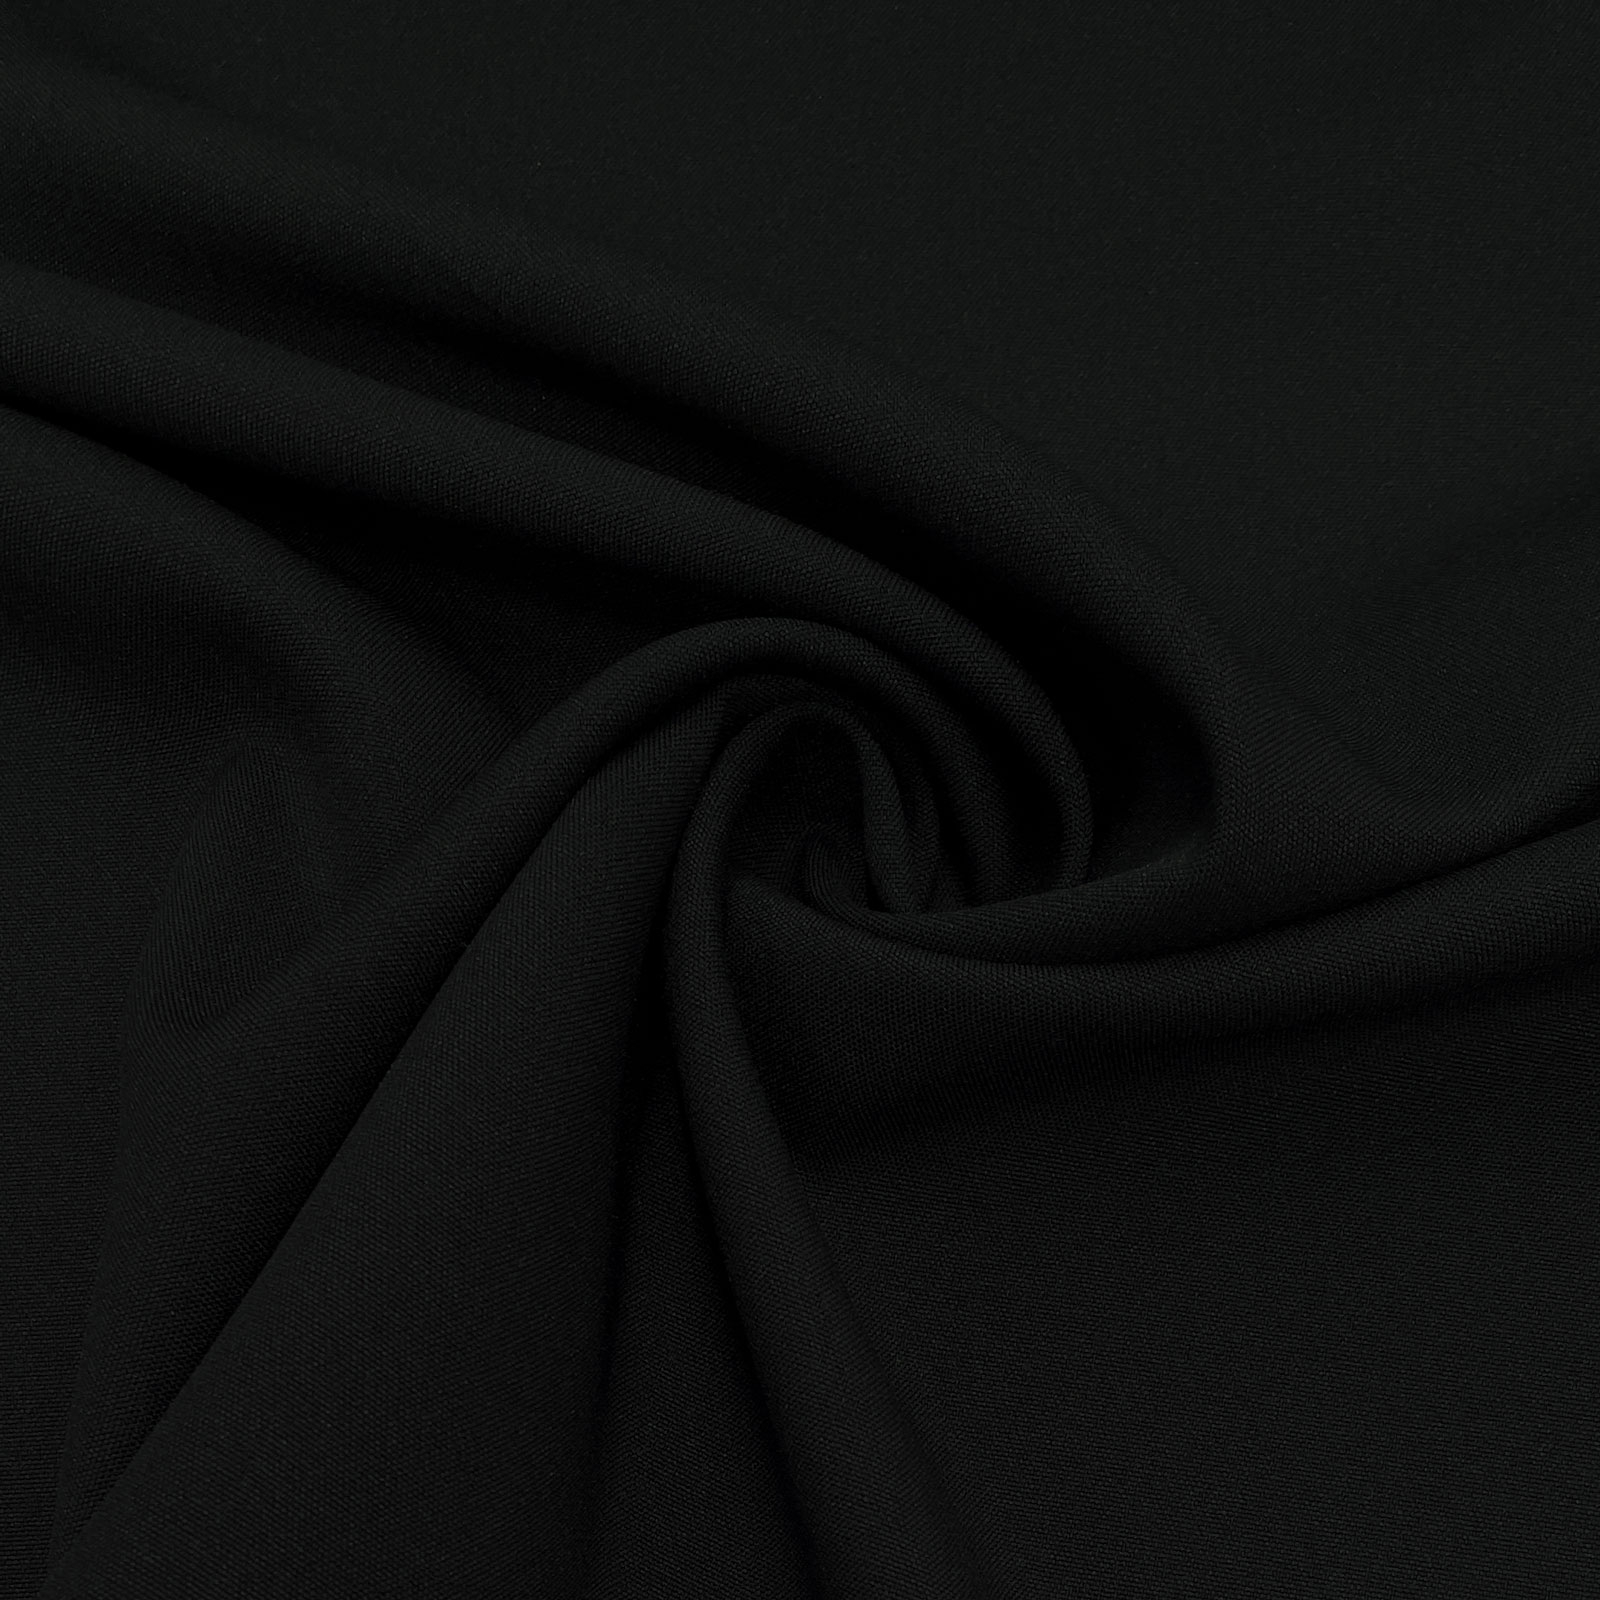 Trekking Functional fabric - slightly elastic & breathable - Black